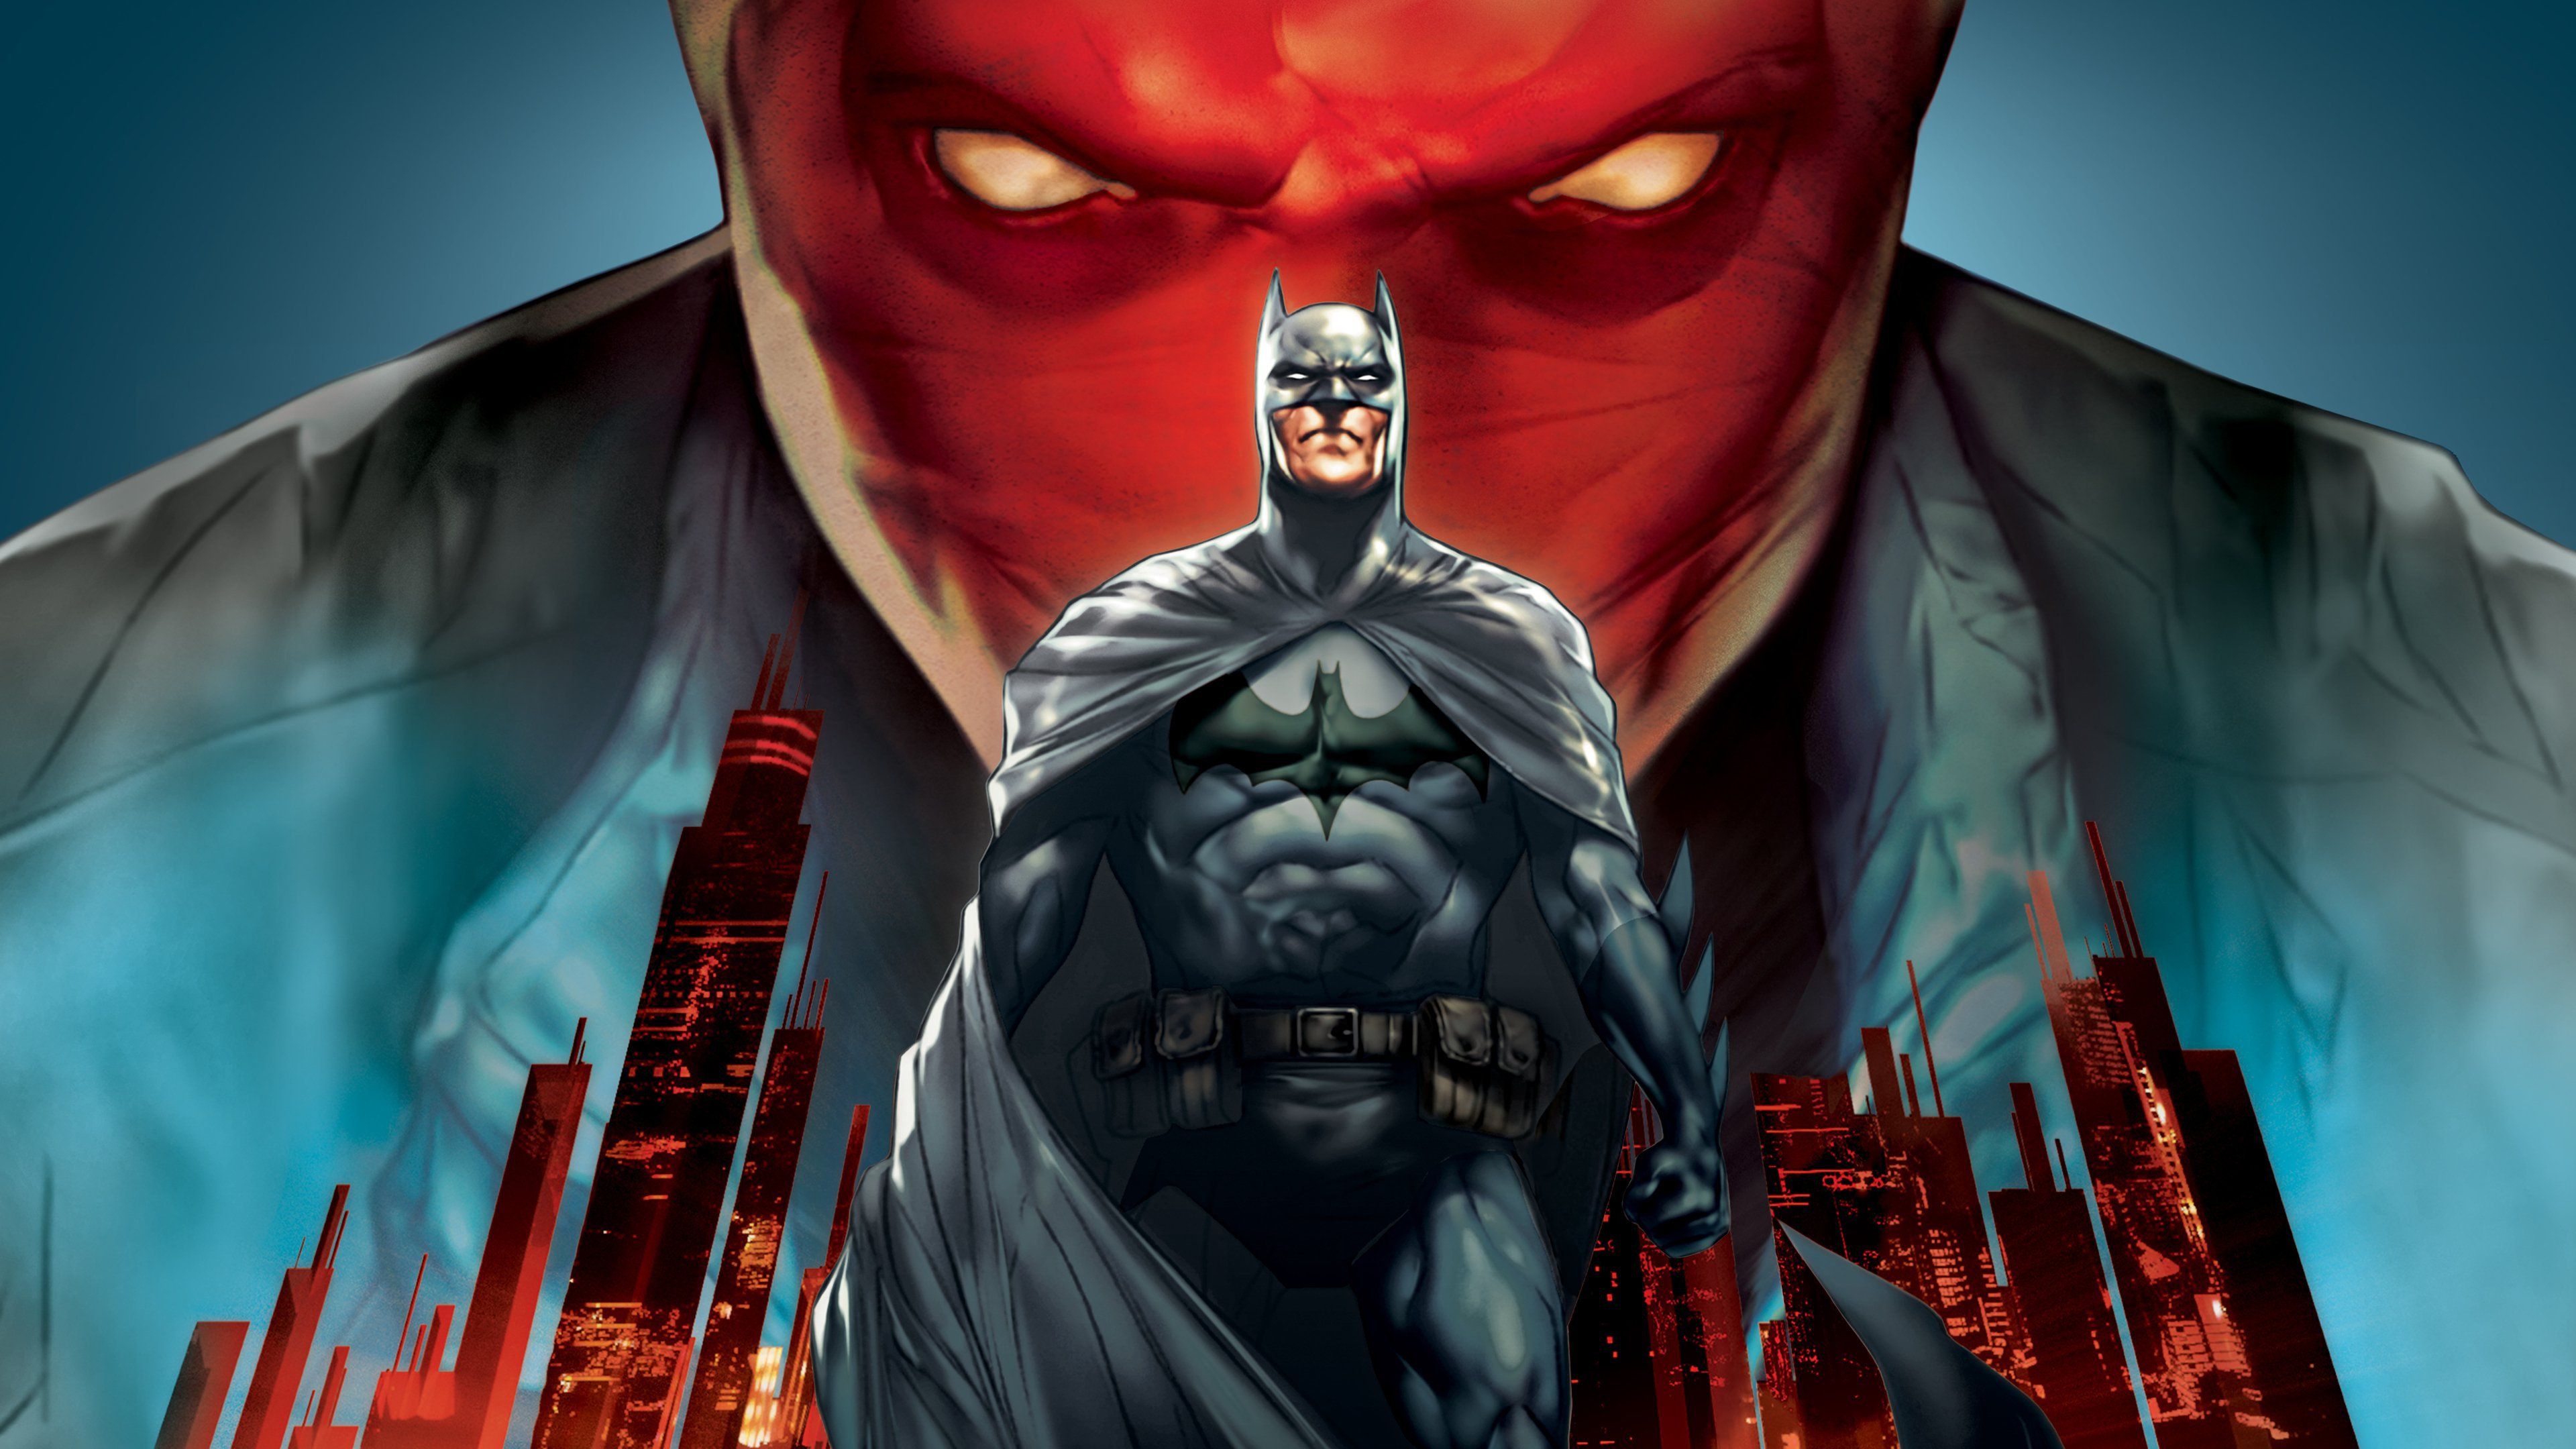 Batman: Under the Red Hood 4k Ultra HD Wallpaper. Background